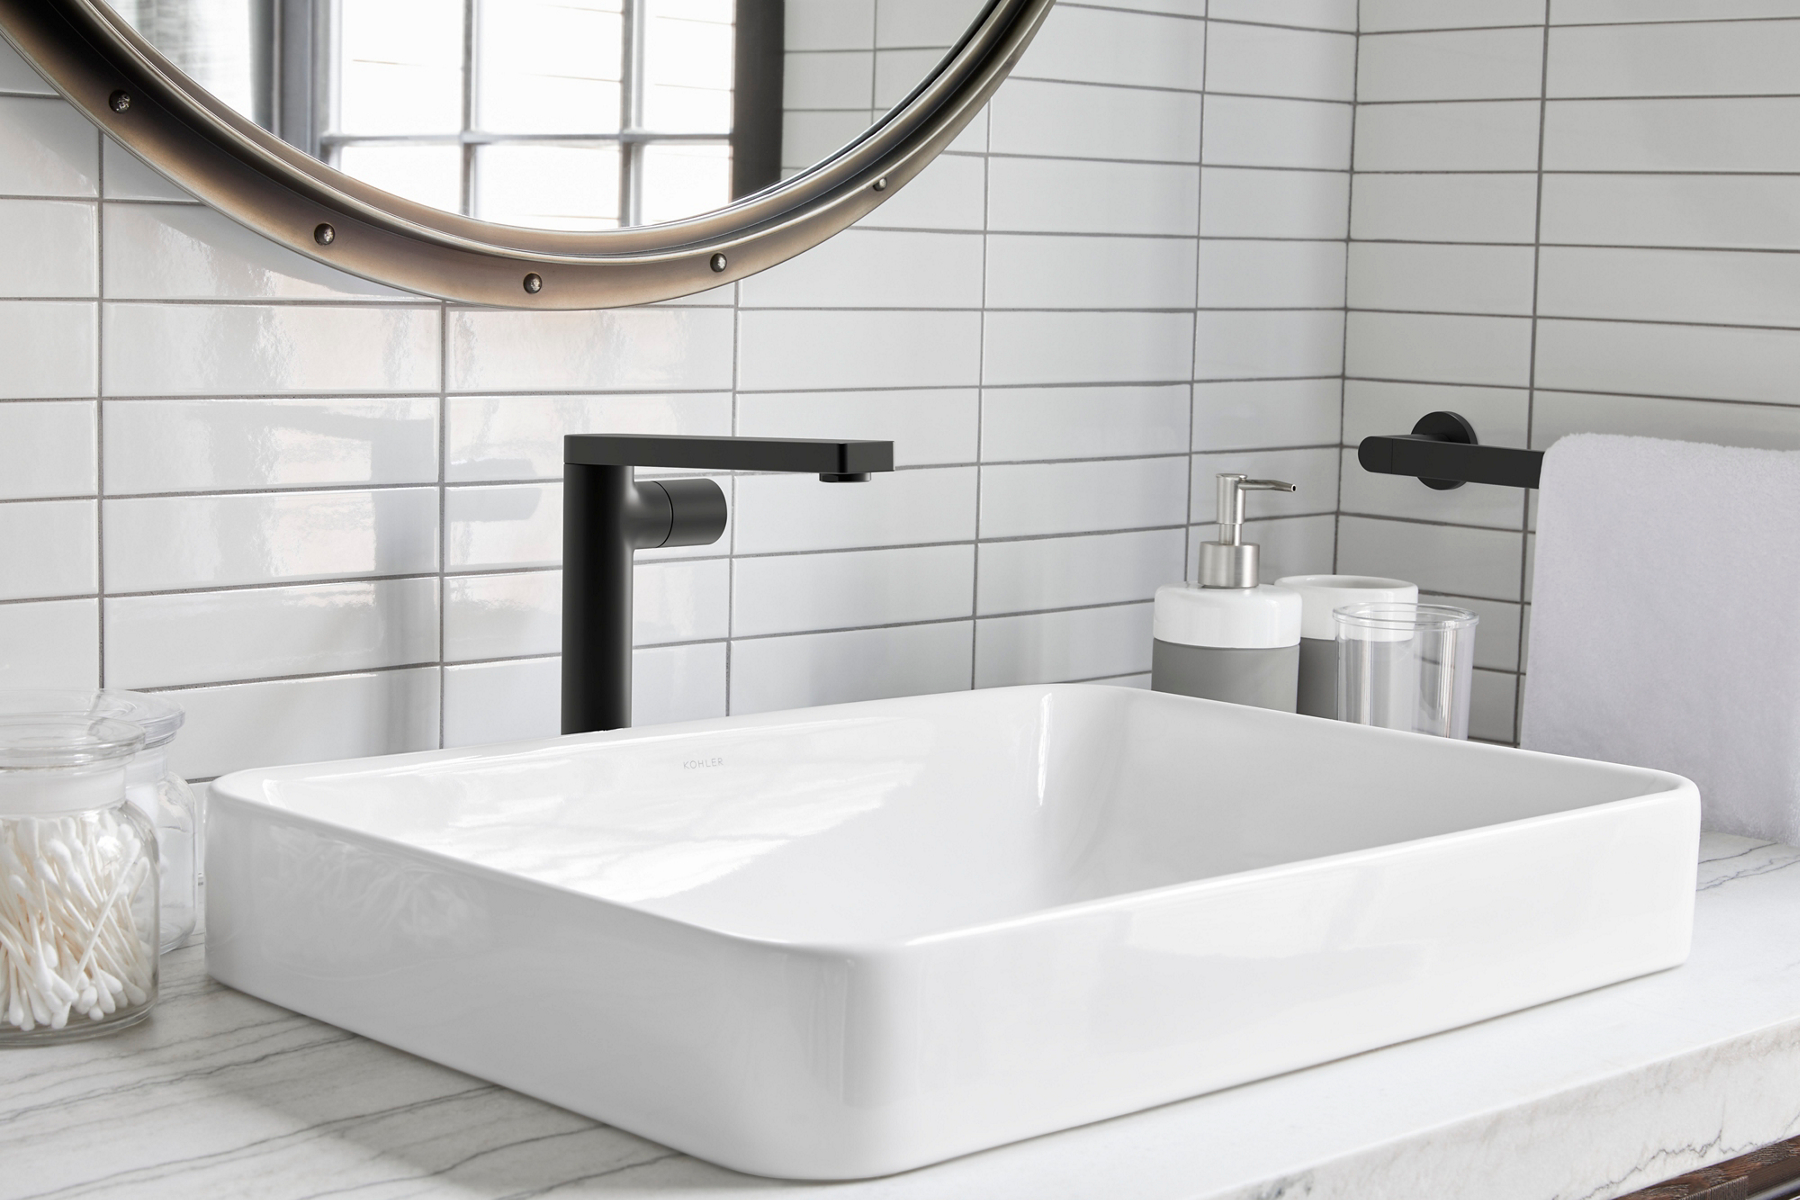 A black KOHLER Composed single handle faucet contrasts with a white Vox rectangle vessel sink and white rectangle tile backsplash.